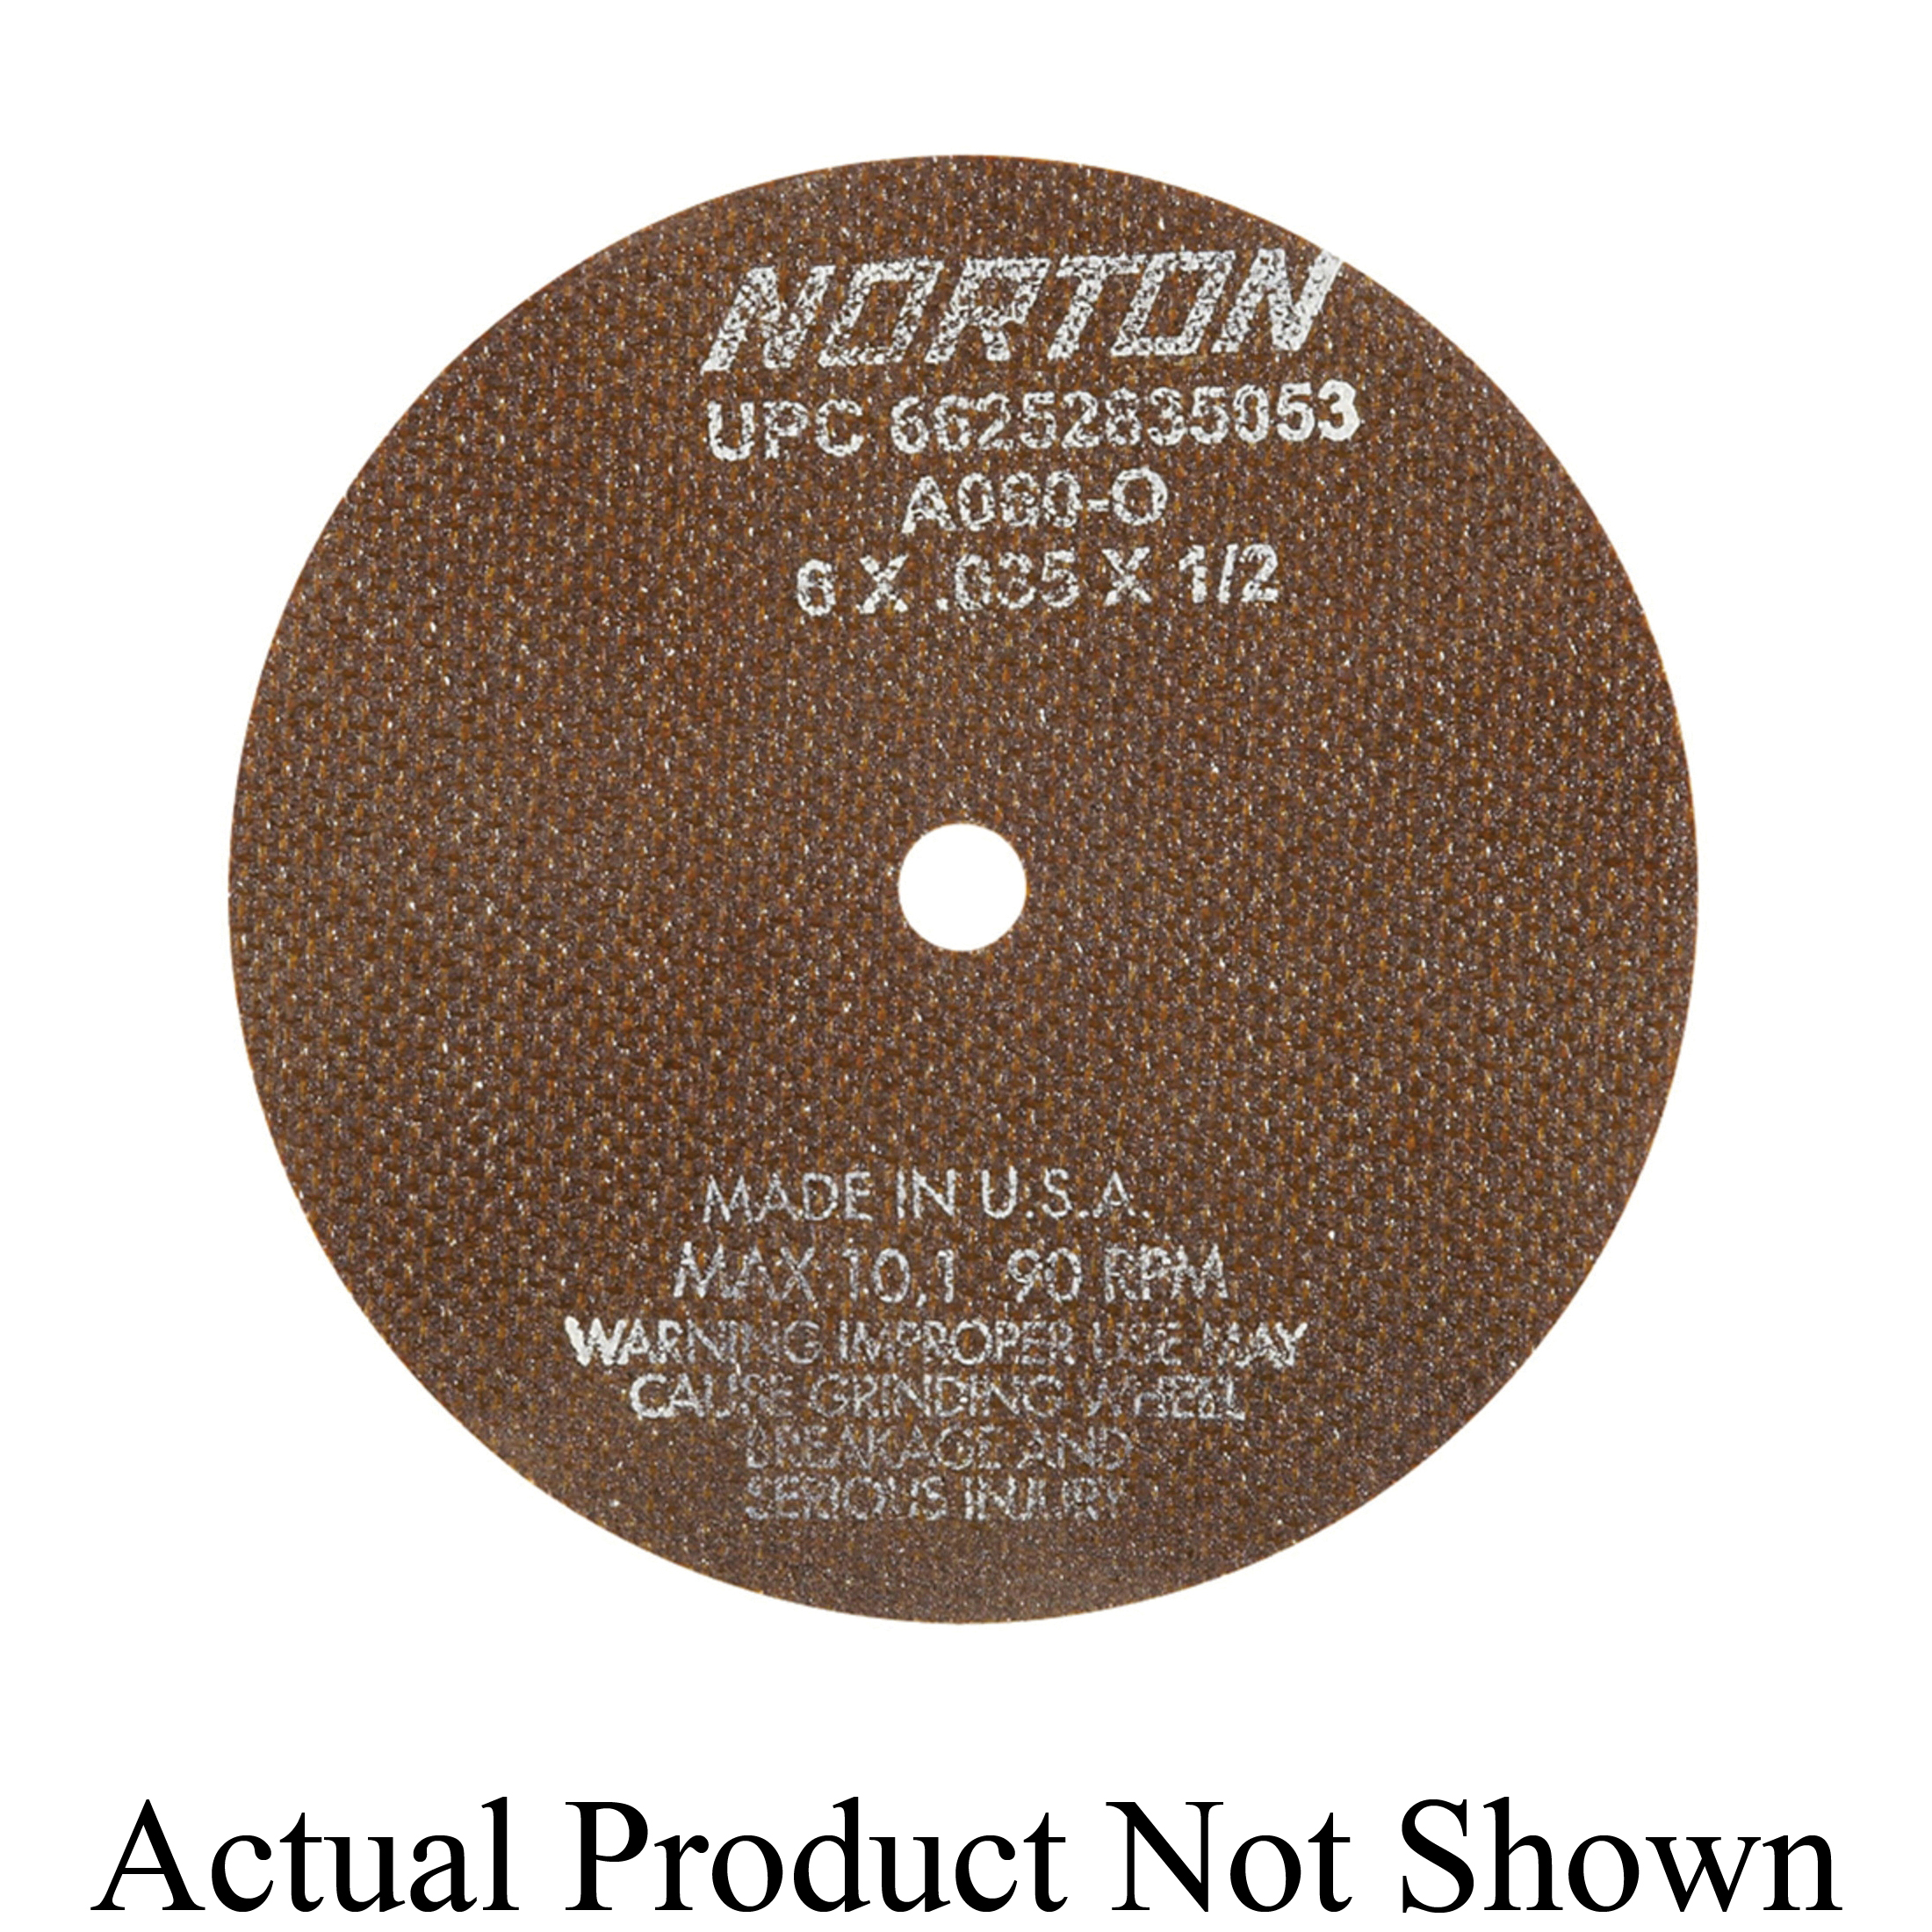 Norton® 66253043009 OBNA2 Toolroom Cut-Off Wheel, 8 in Dia x 0.06 in THK, 1/2 in Center Hole, 60 Grit, Aluminum Oxide Abrasive